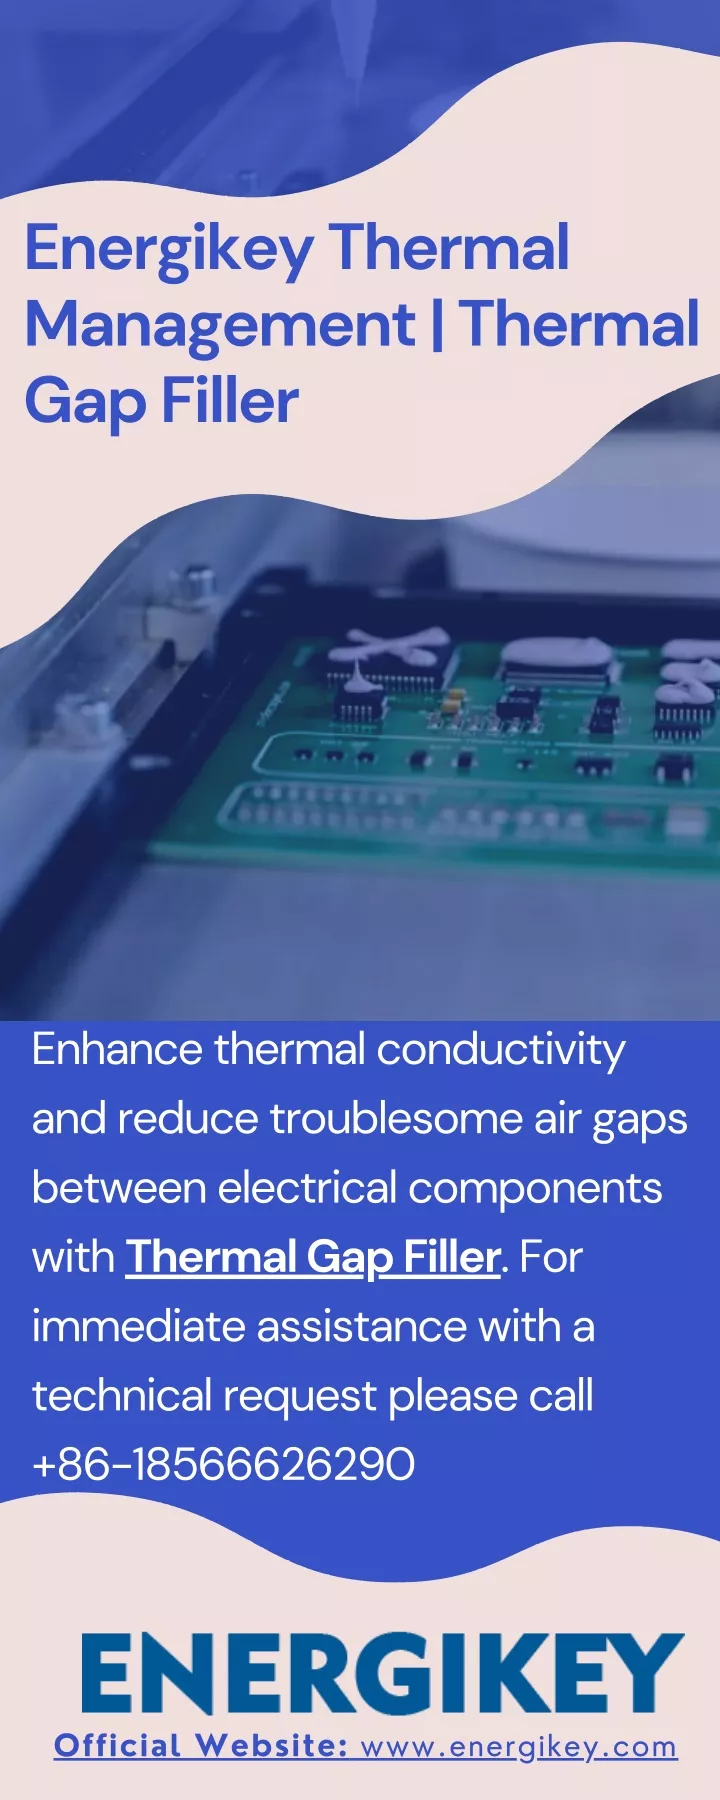 energikey thermal management thermal gap filler